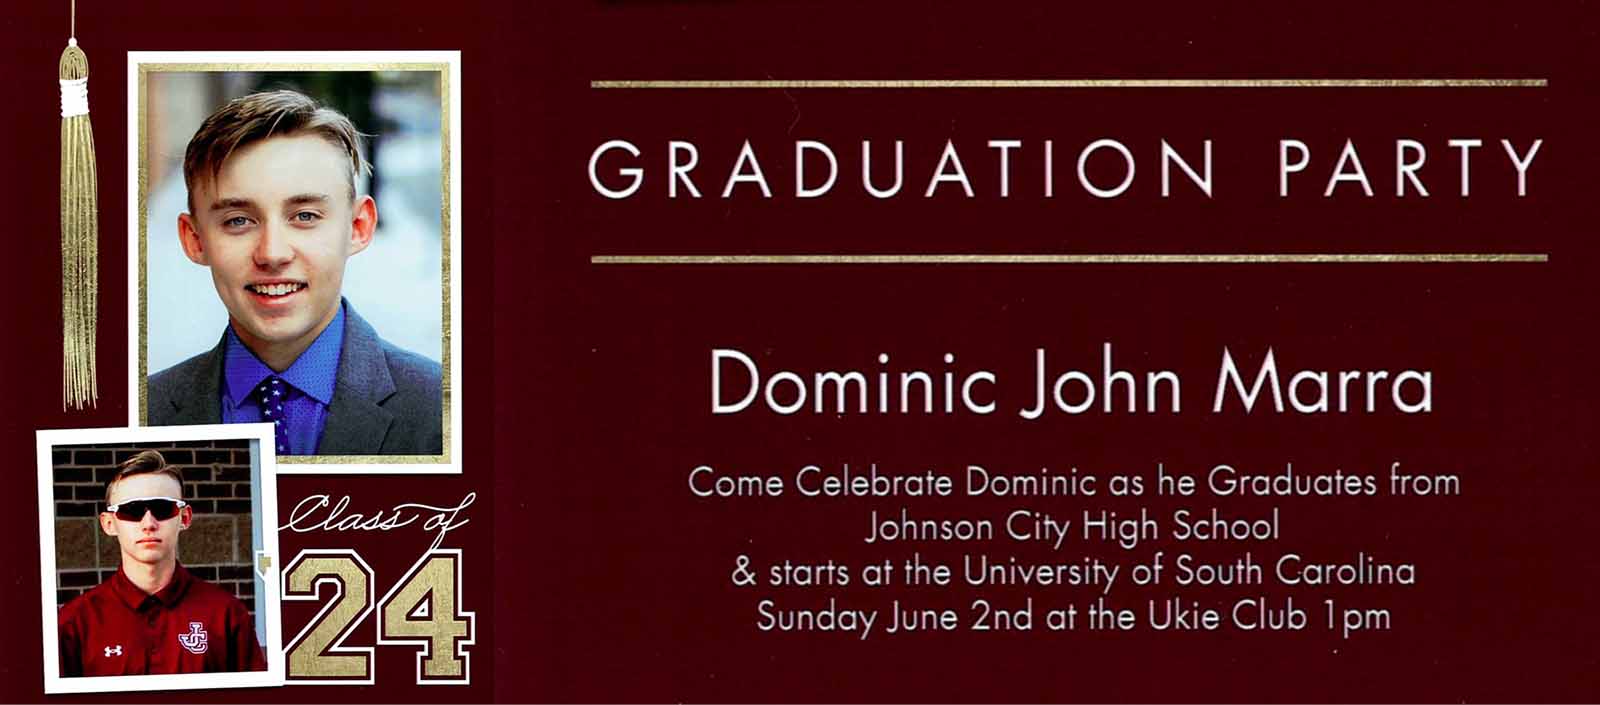 Graduation Party for Dominic John Marra